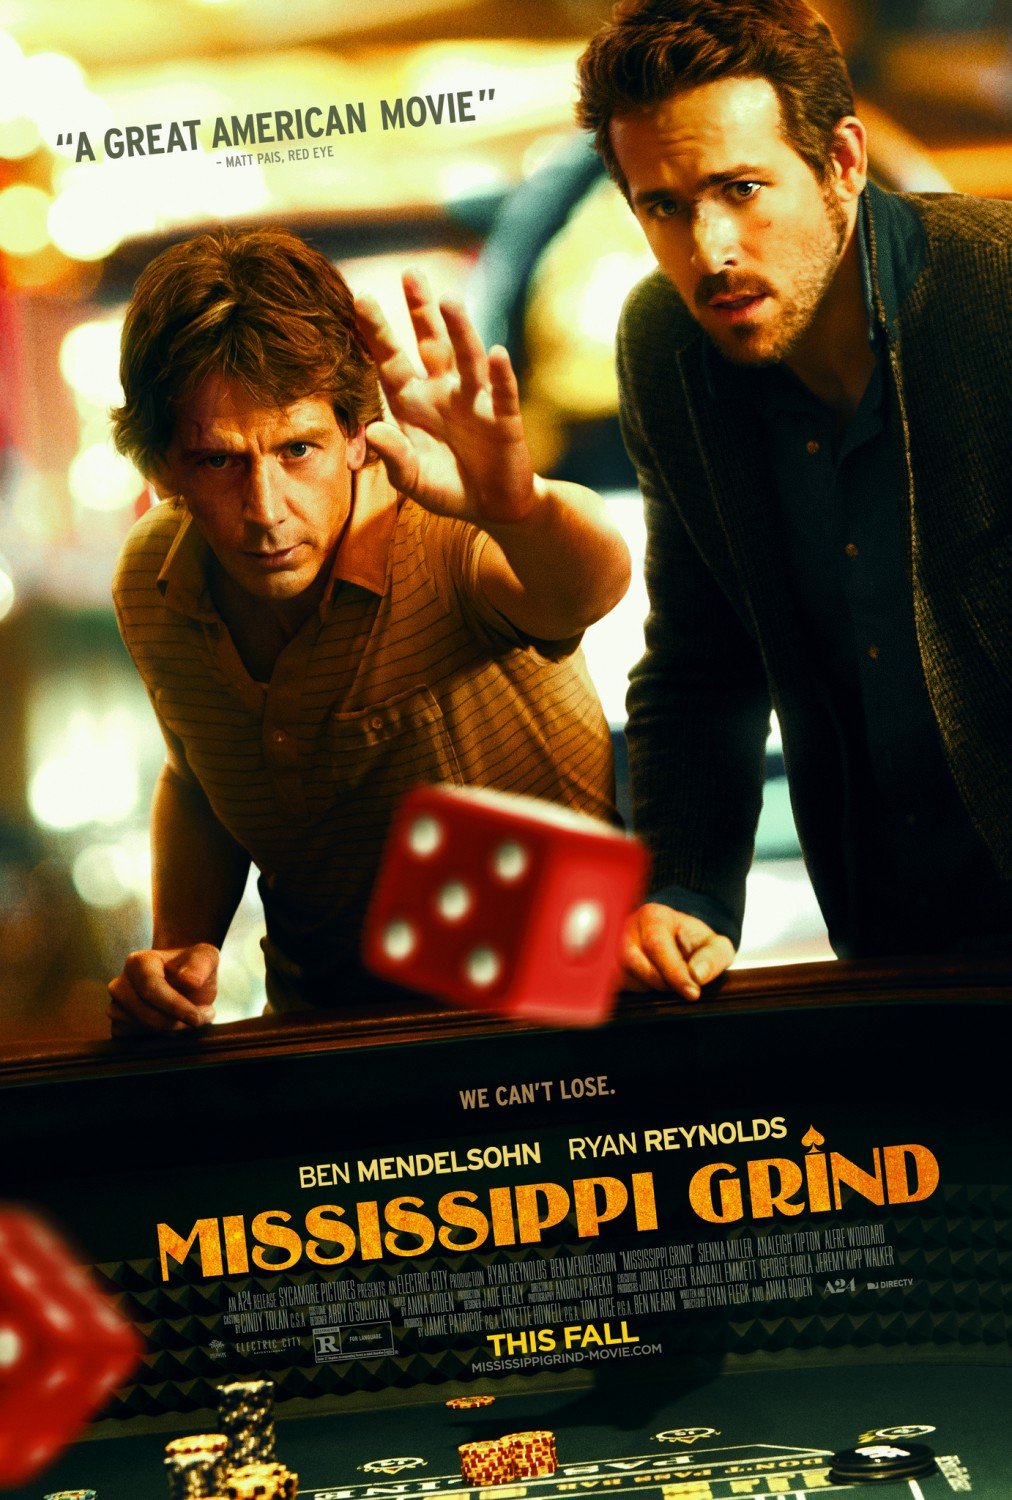 Misssissippi Grind Poster with Ben Mendelsohn and Ryan Reynolds - HeadStuff.org